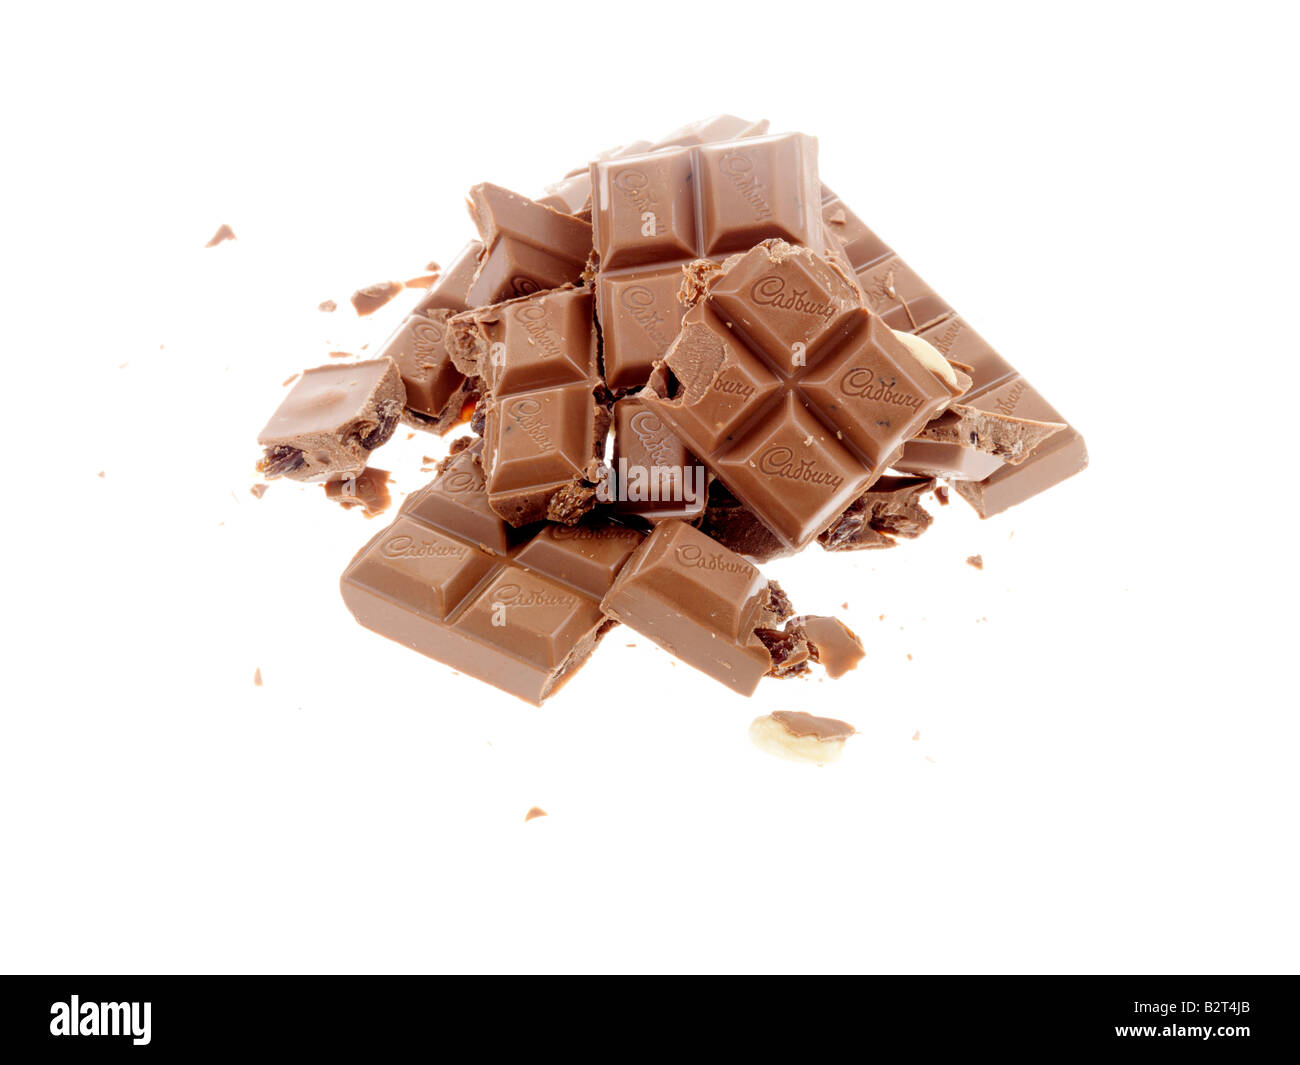 Cadbury chocolate bar hi-res stock photography and images - Alamy